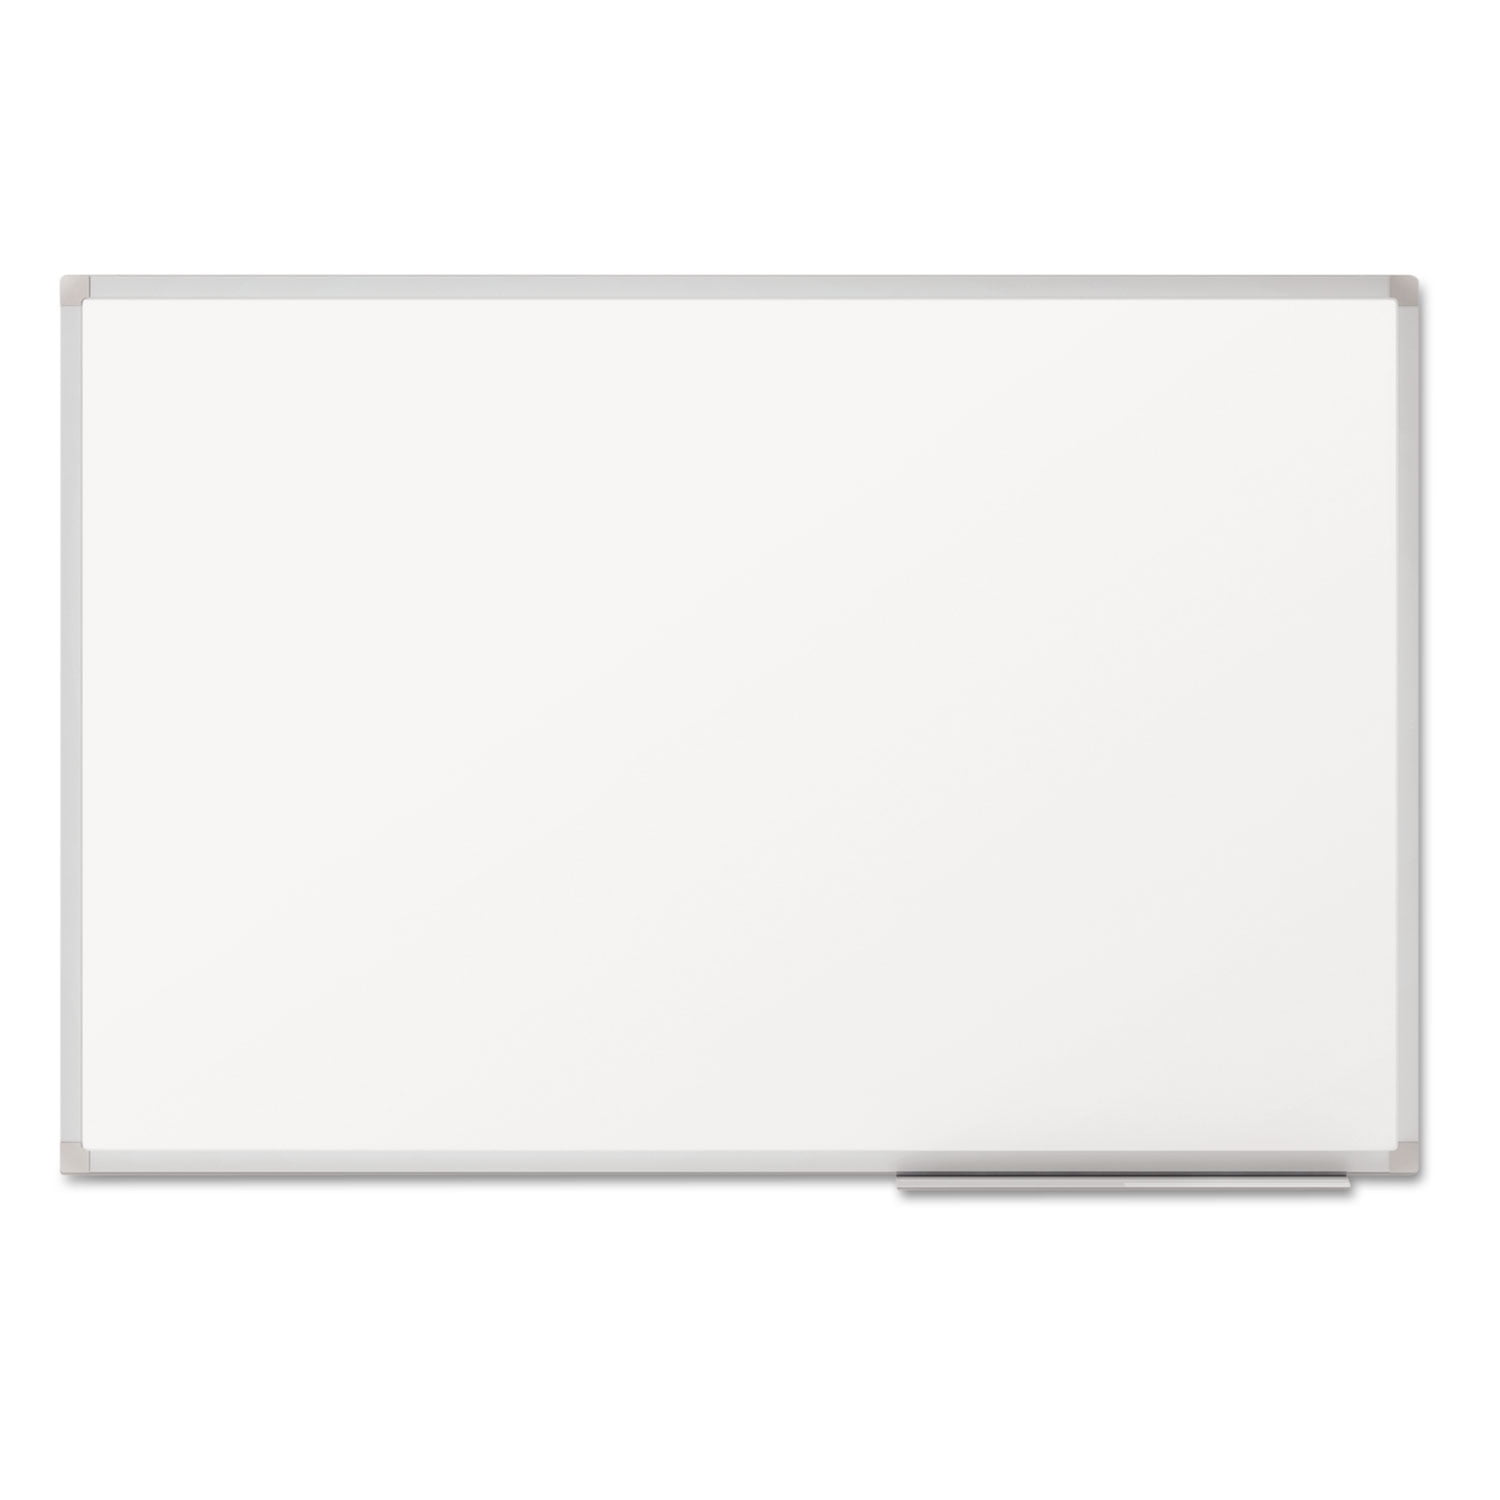 Post-it White Dry-Erase Surface 36 x 24